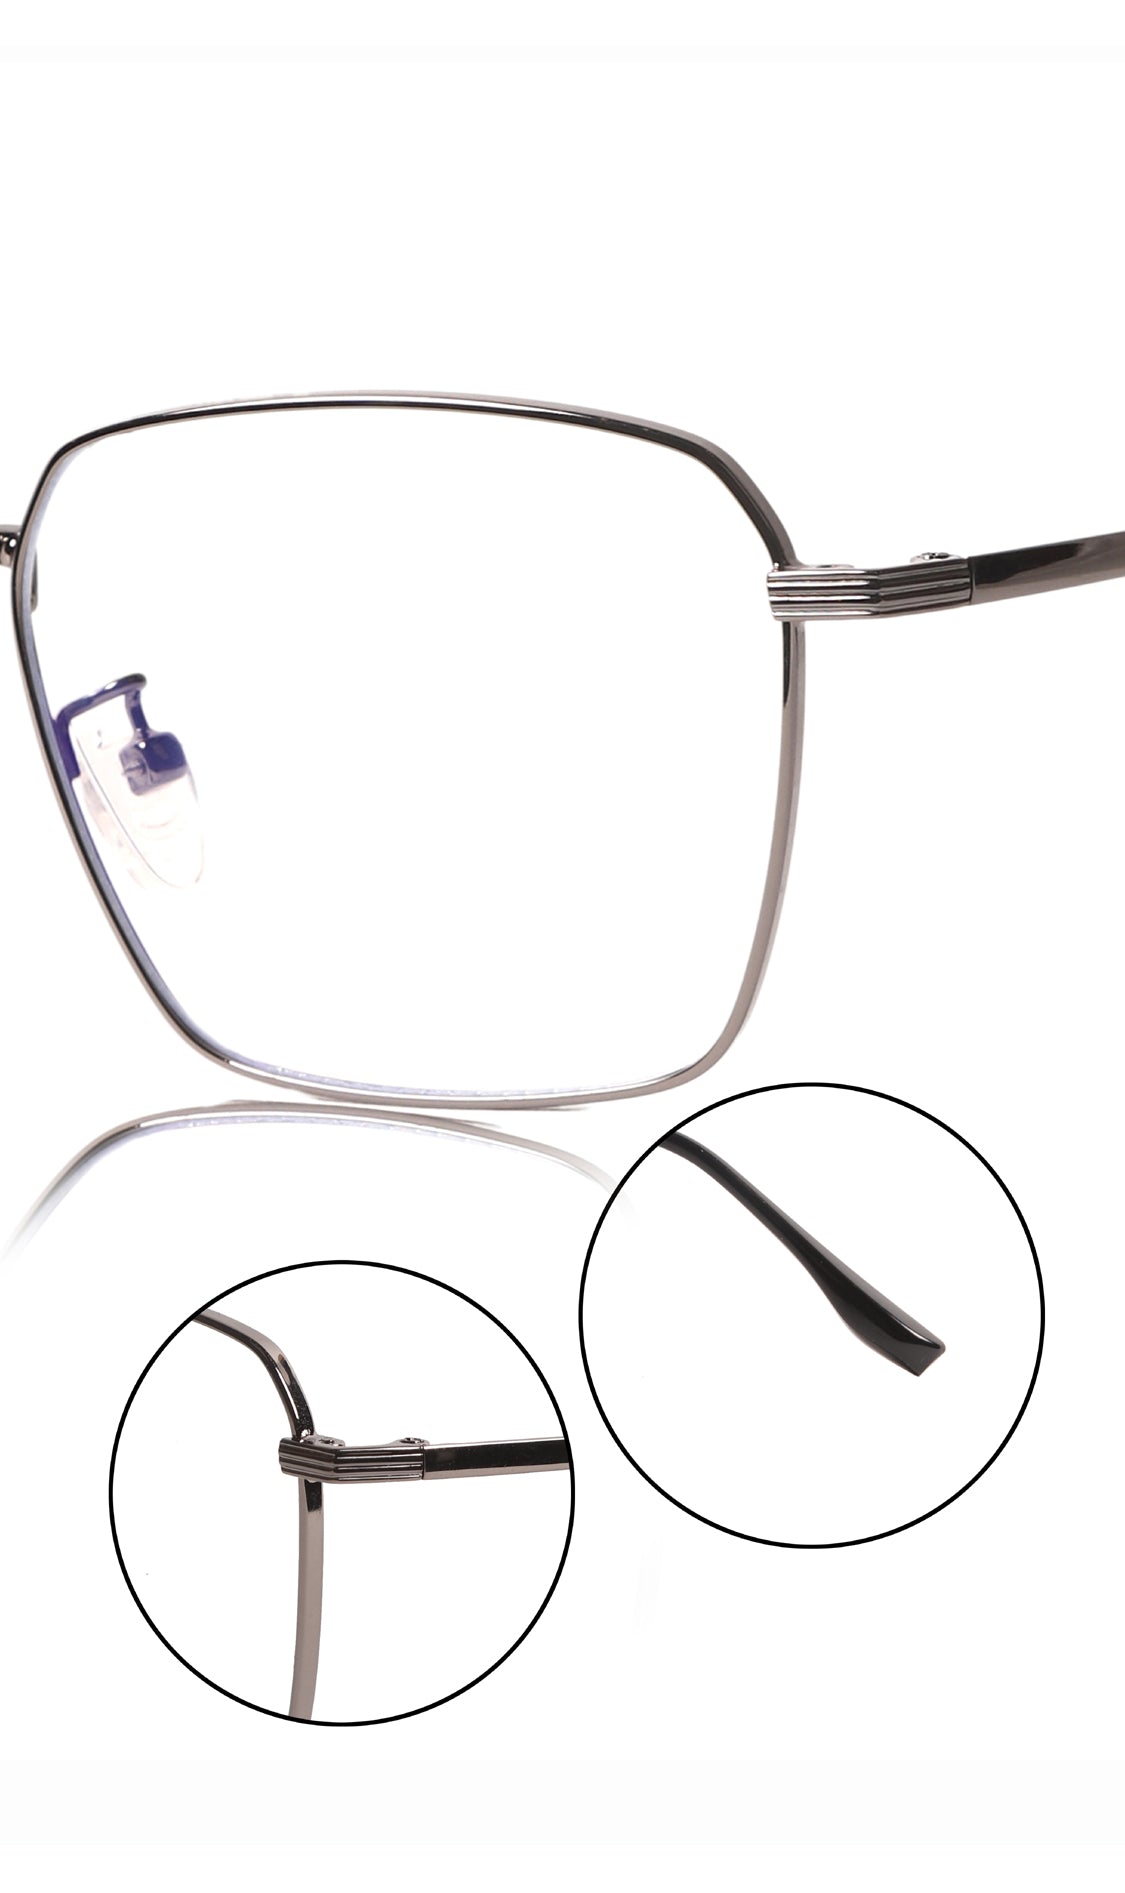 Jodykoes® Premium Series Metal Spectacle Frame With Anti-Glare Blue Light Blocking Eyeglasses for Men and Women | Computer and Mobile Phone Protection Eyewear Frames (Black/Grey) - Jodykoes ®